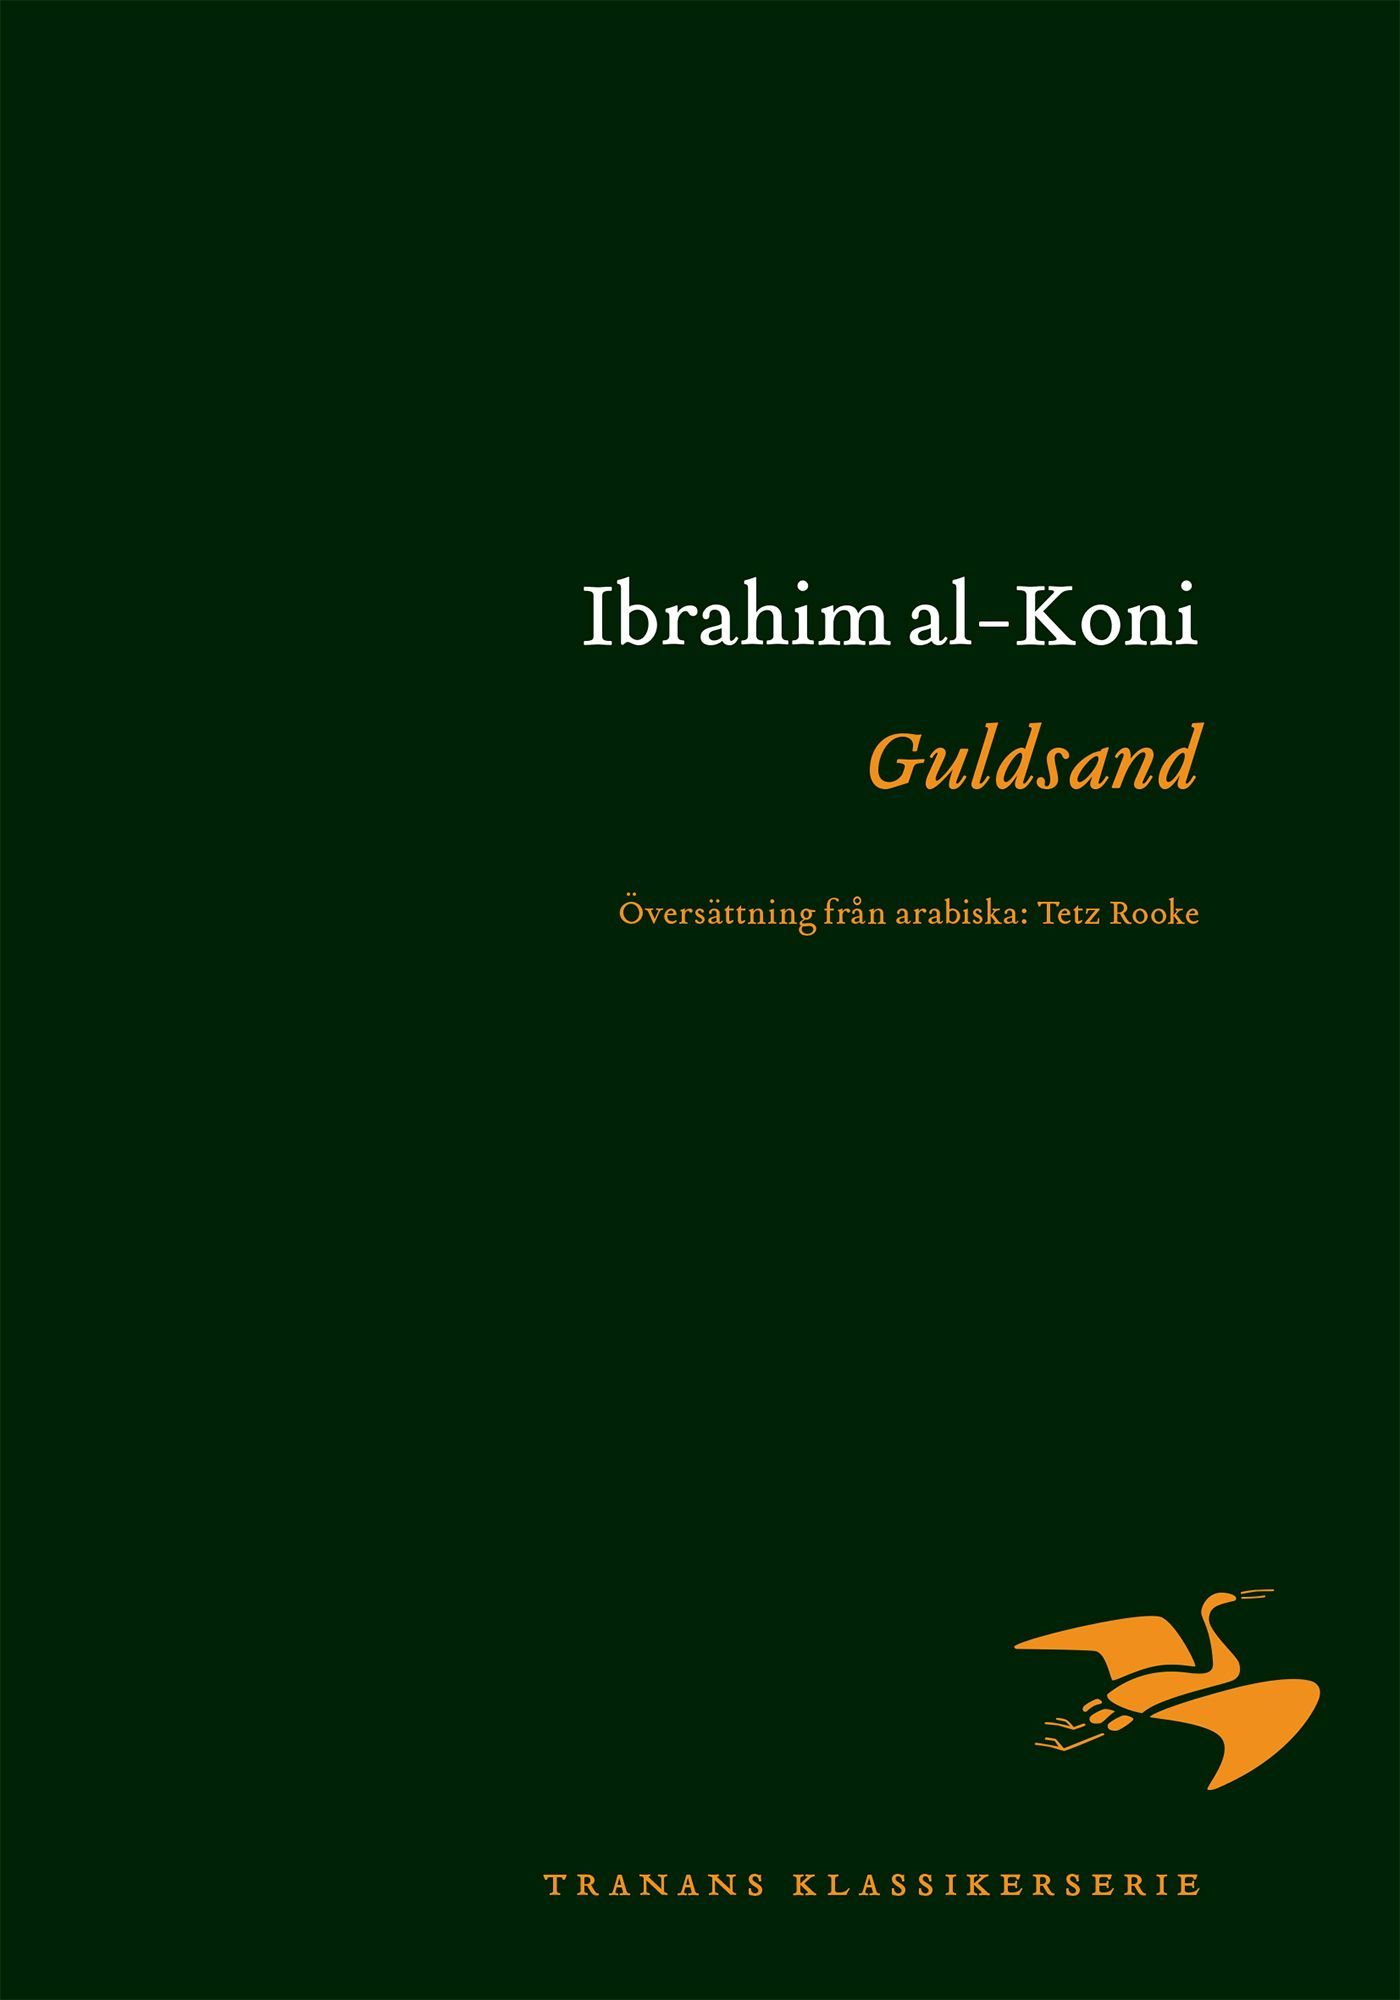 Guldsand, e-bog af Ibrahim al-Koni